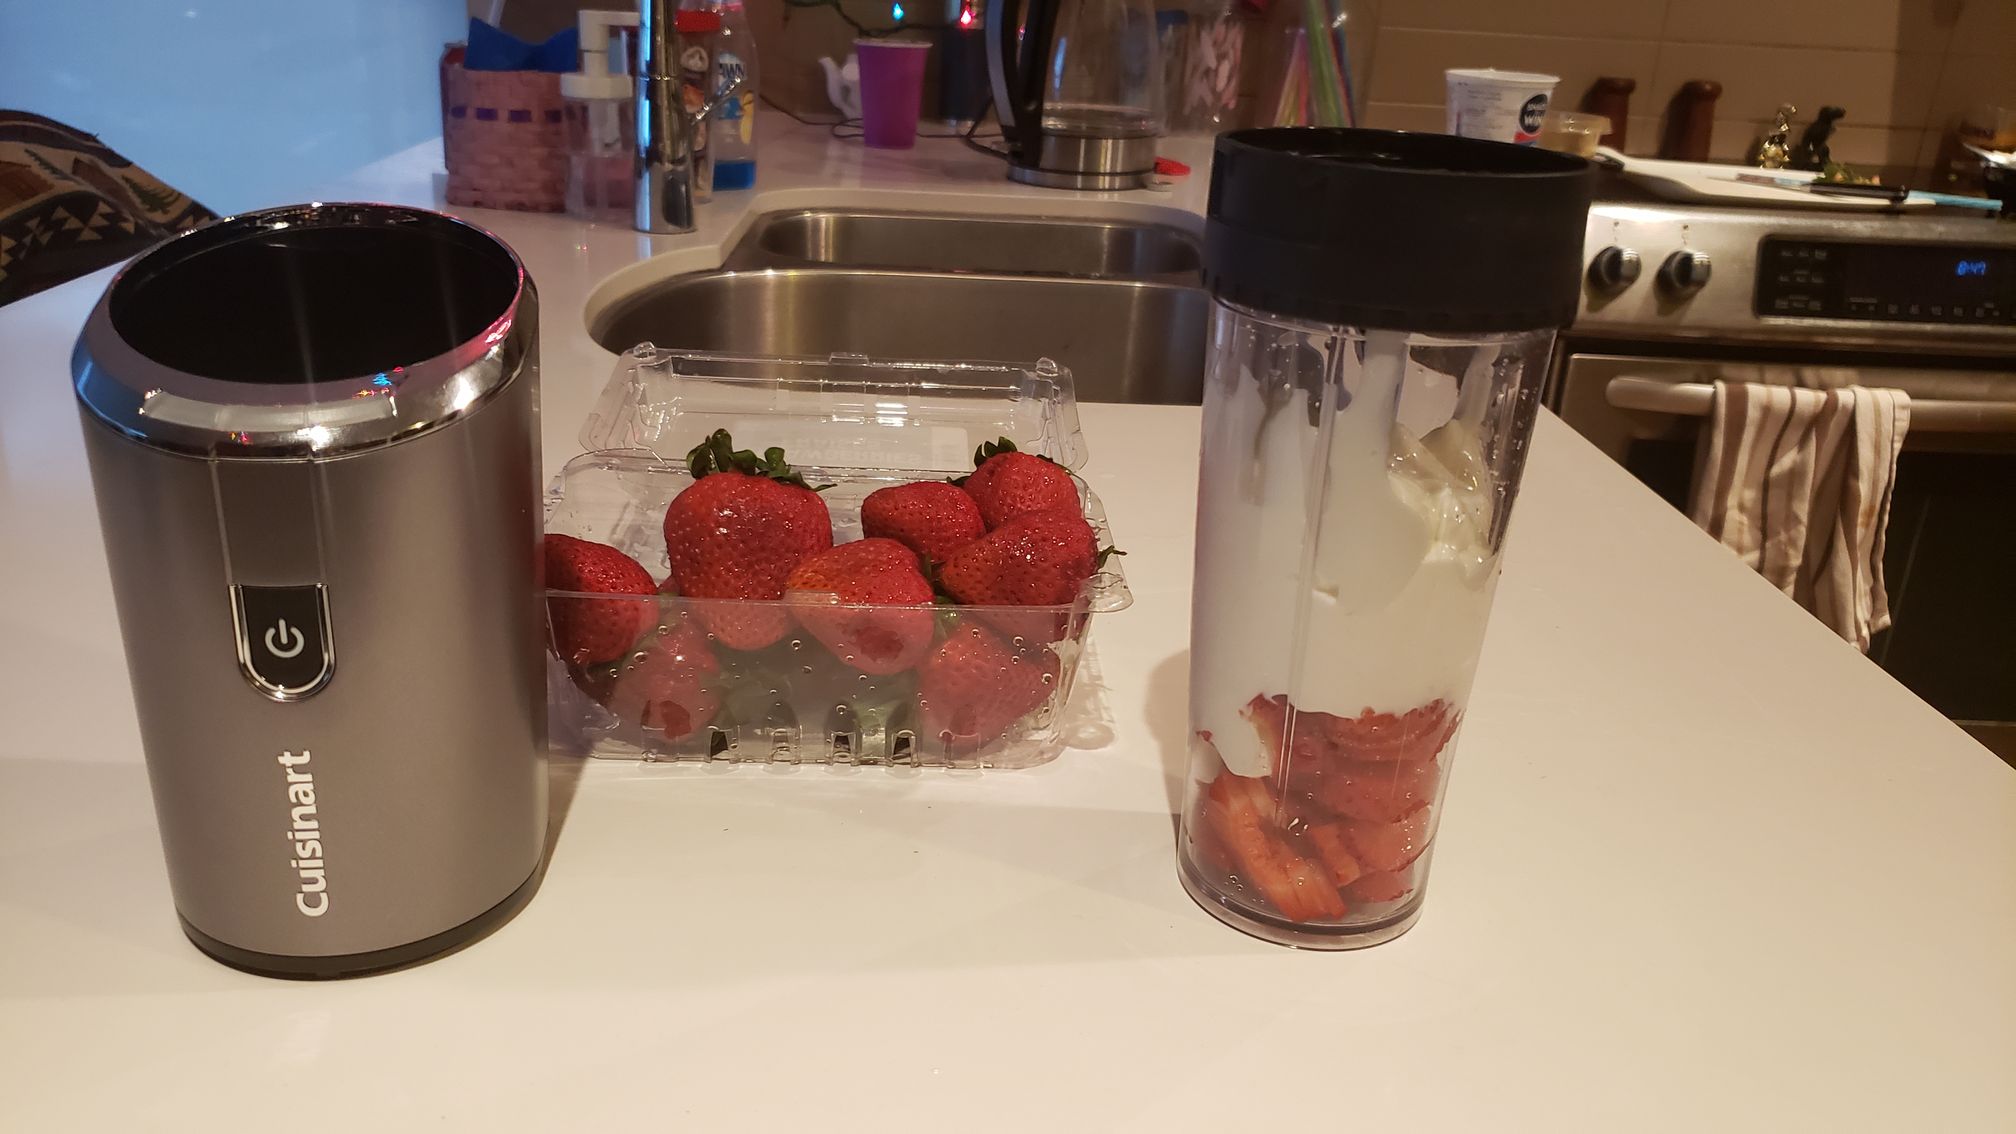 image of blender base next to fresh strawberries and tumbler full of ingredients